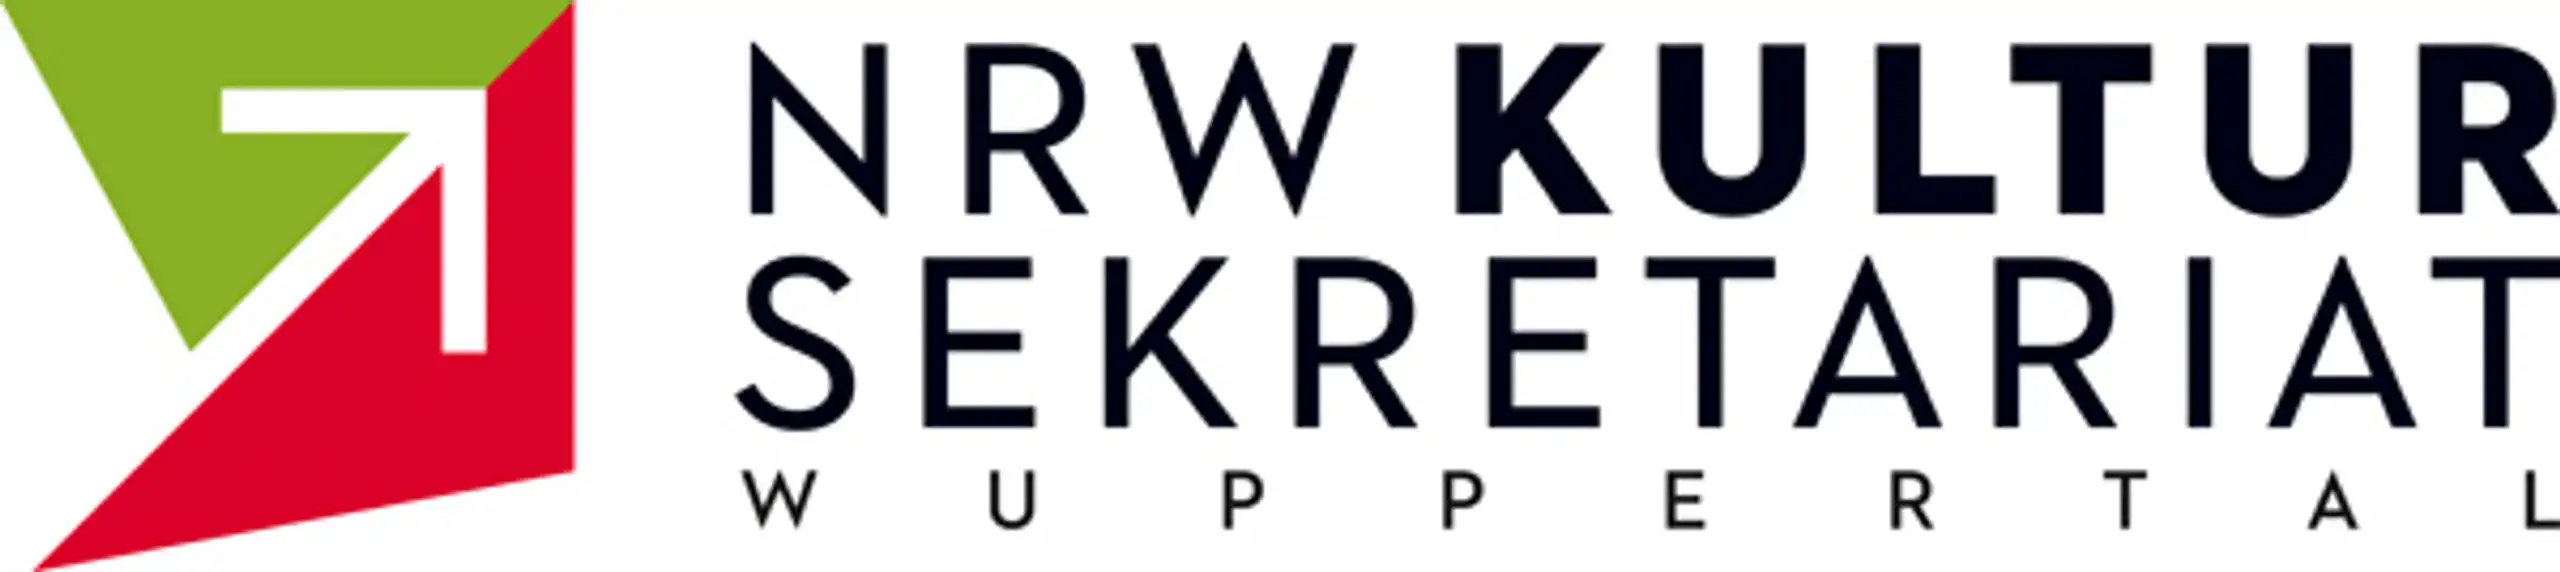 Das Logo des NRW Kultursekretariats